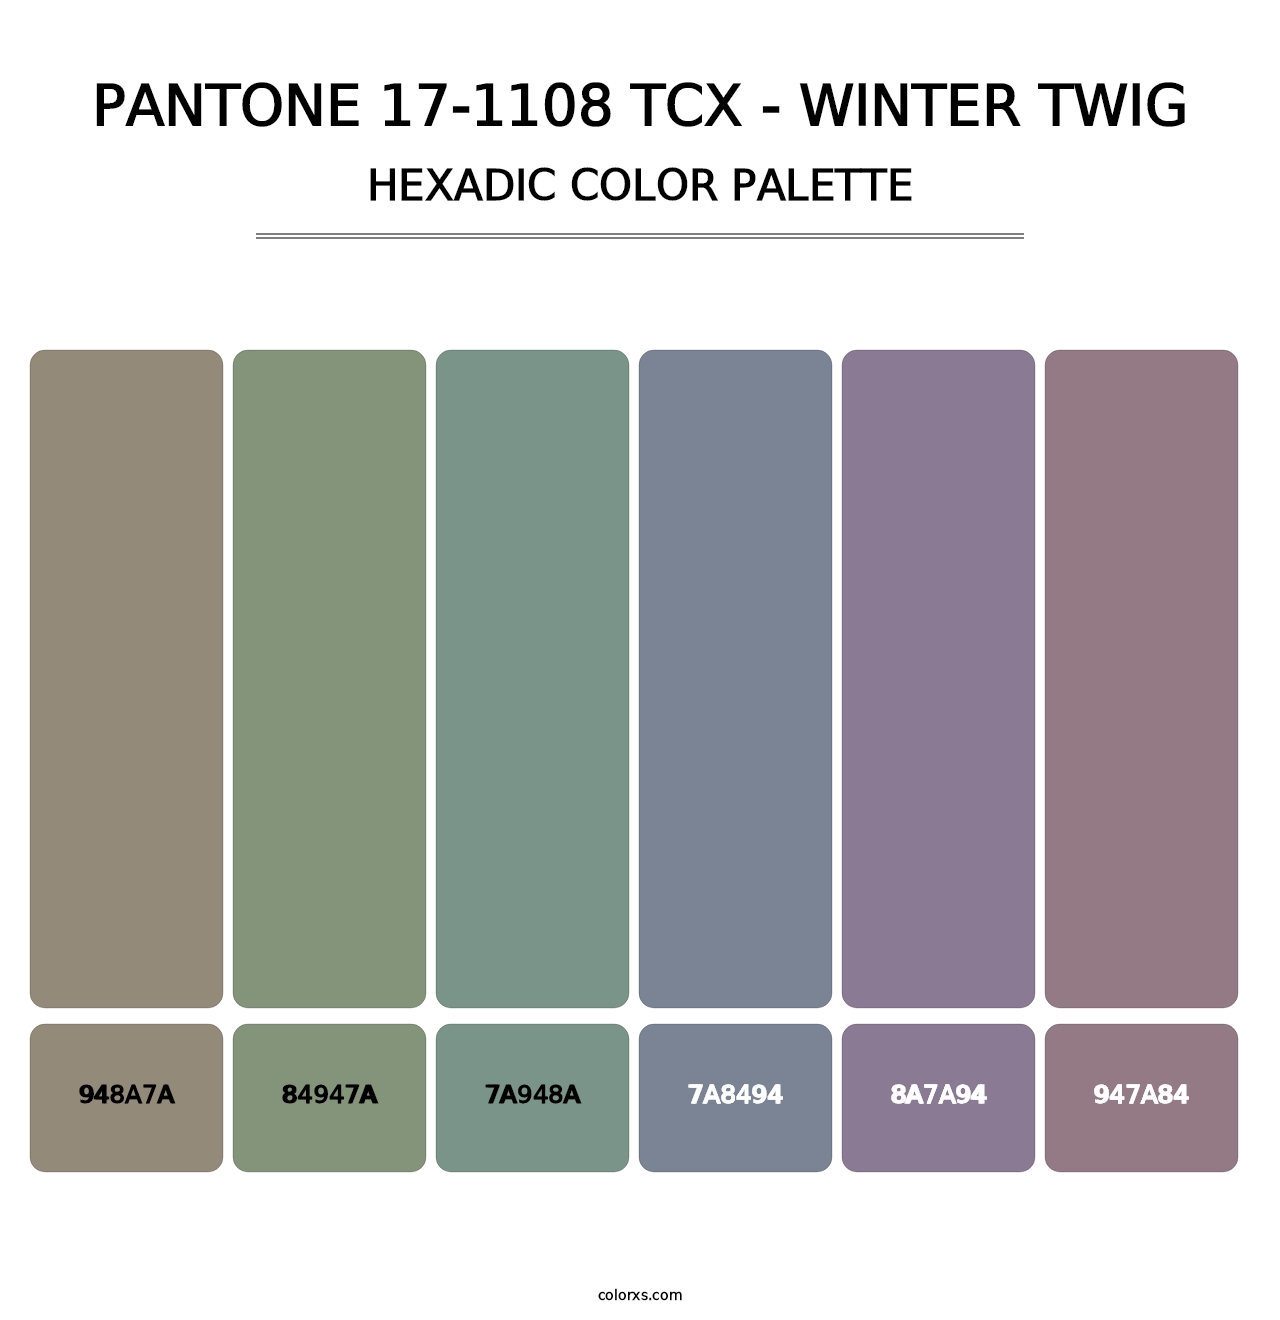 PANTONE 17-1108 TCX - Winter Twig - Hexadic Color Palette